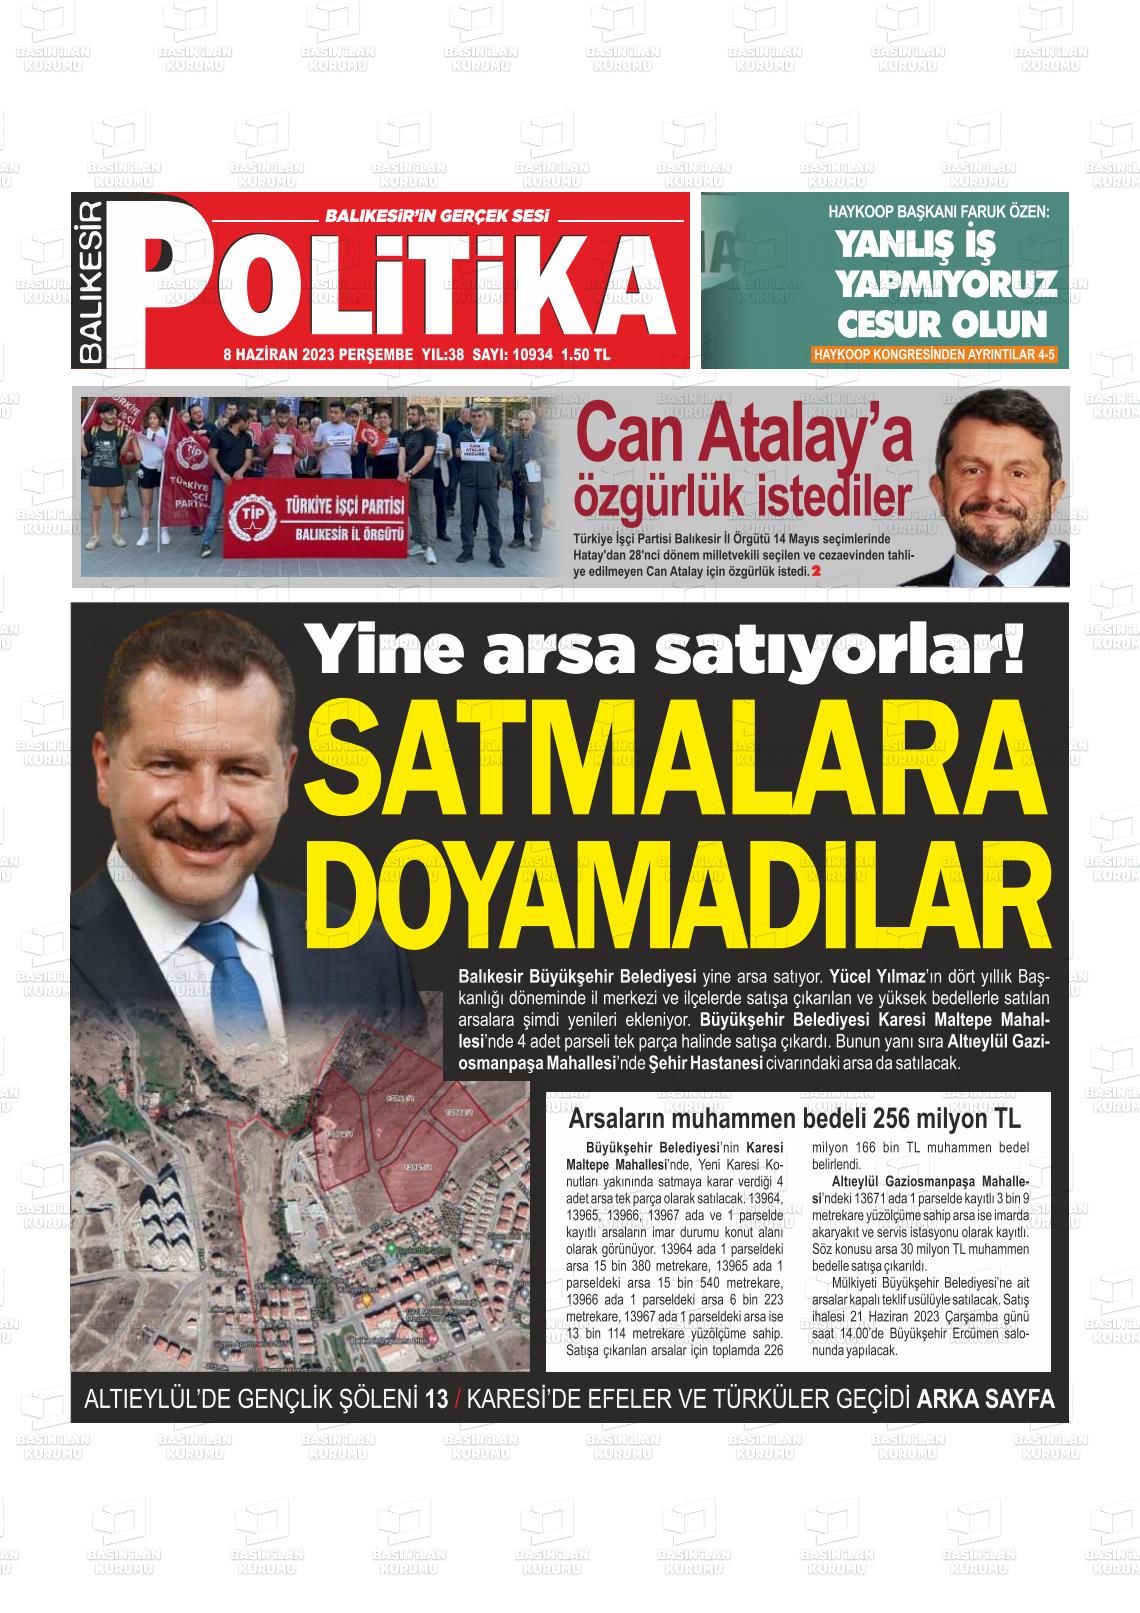 08 Haziran 2023 Balıkesir Politika Gazete Manşeti